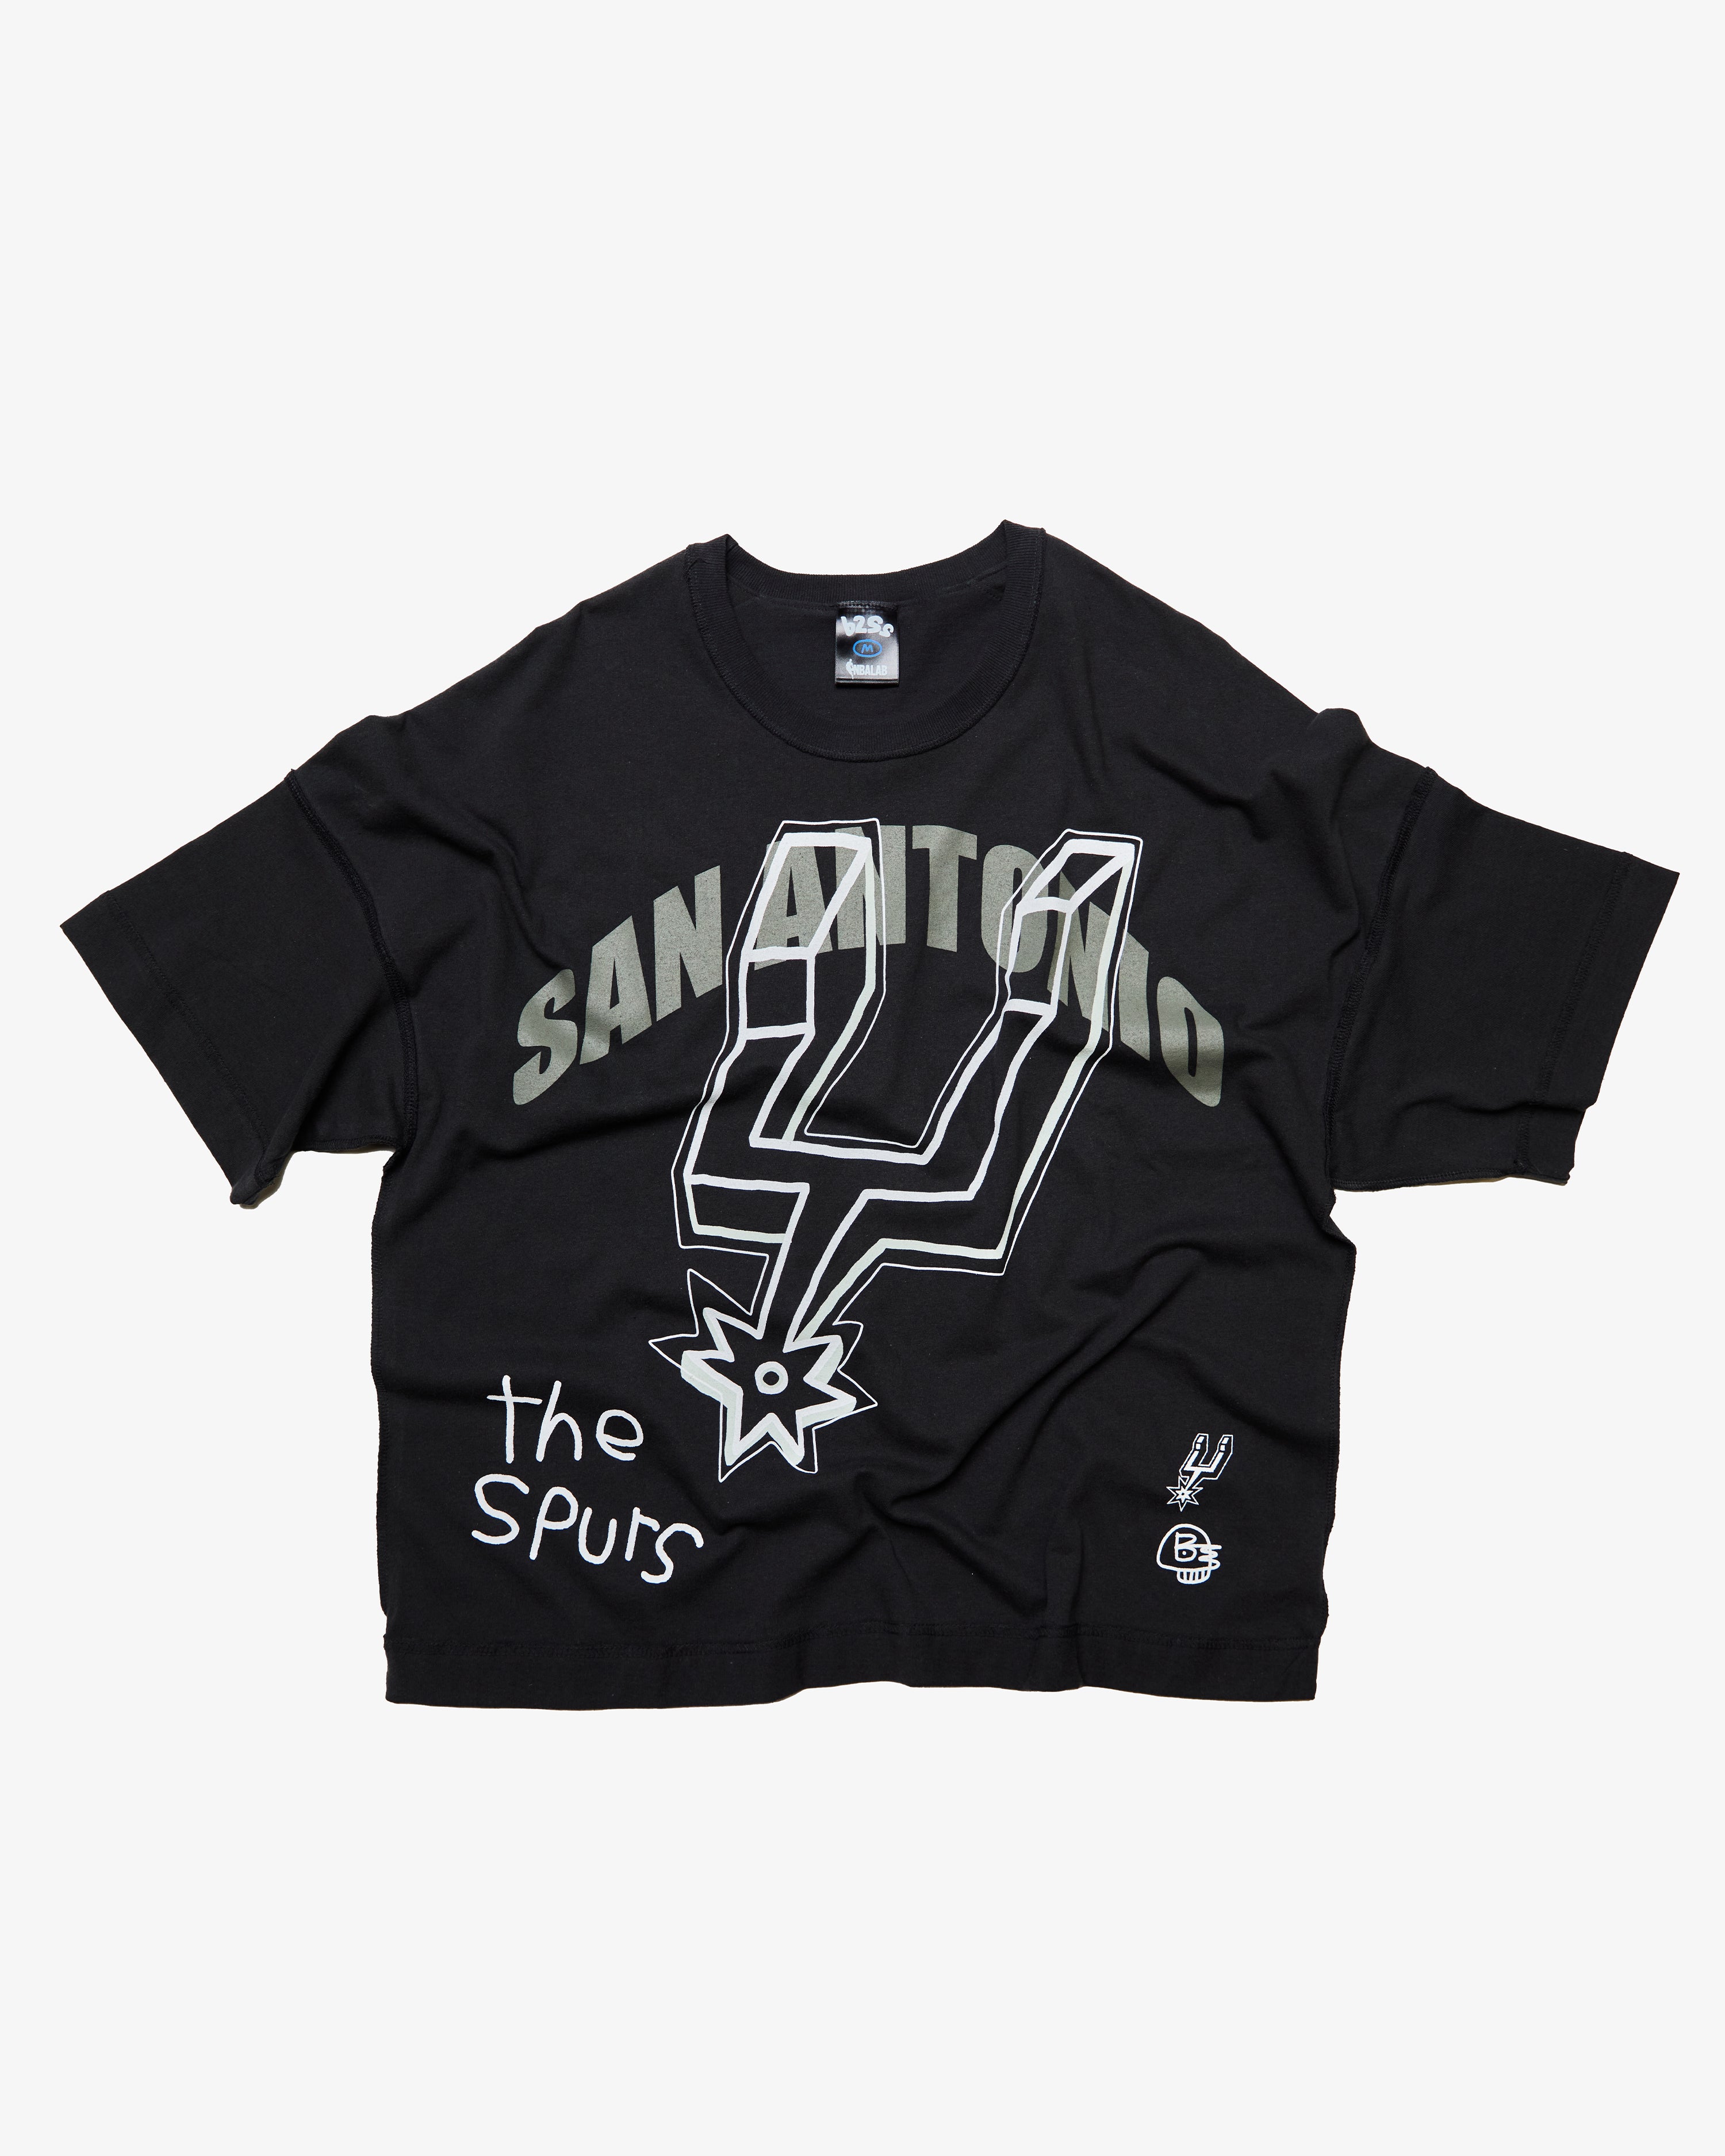 San Antonio Spurs - Shop All